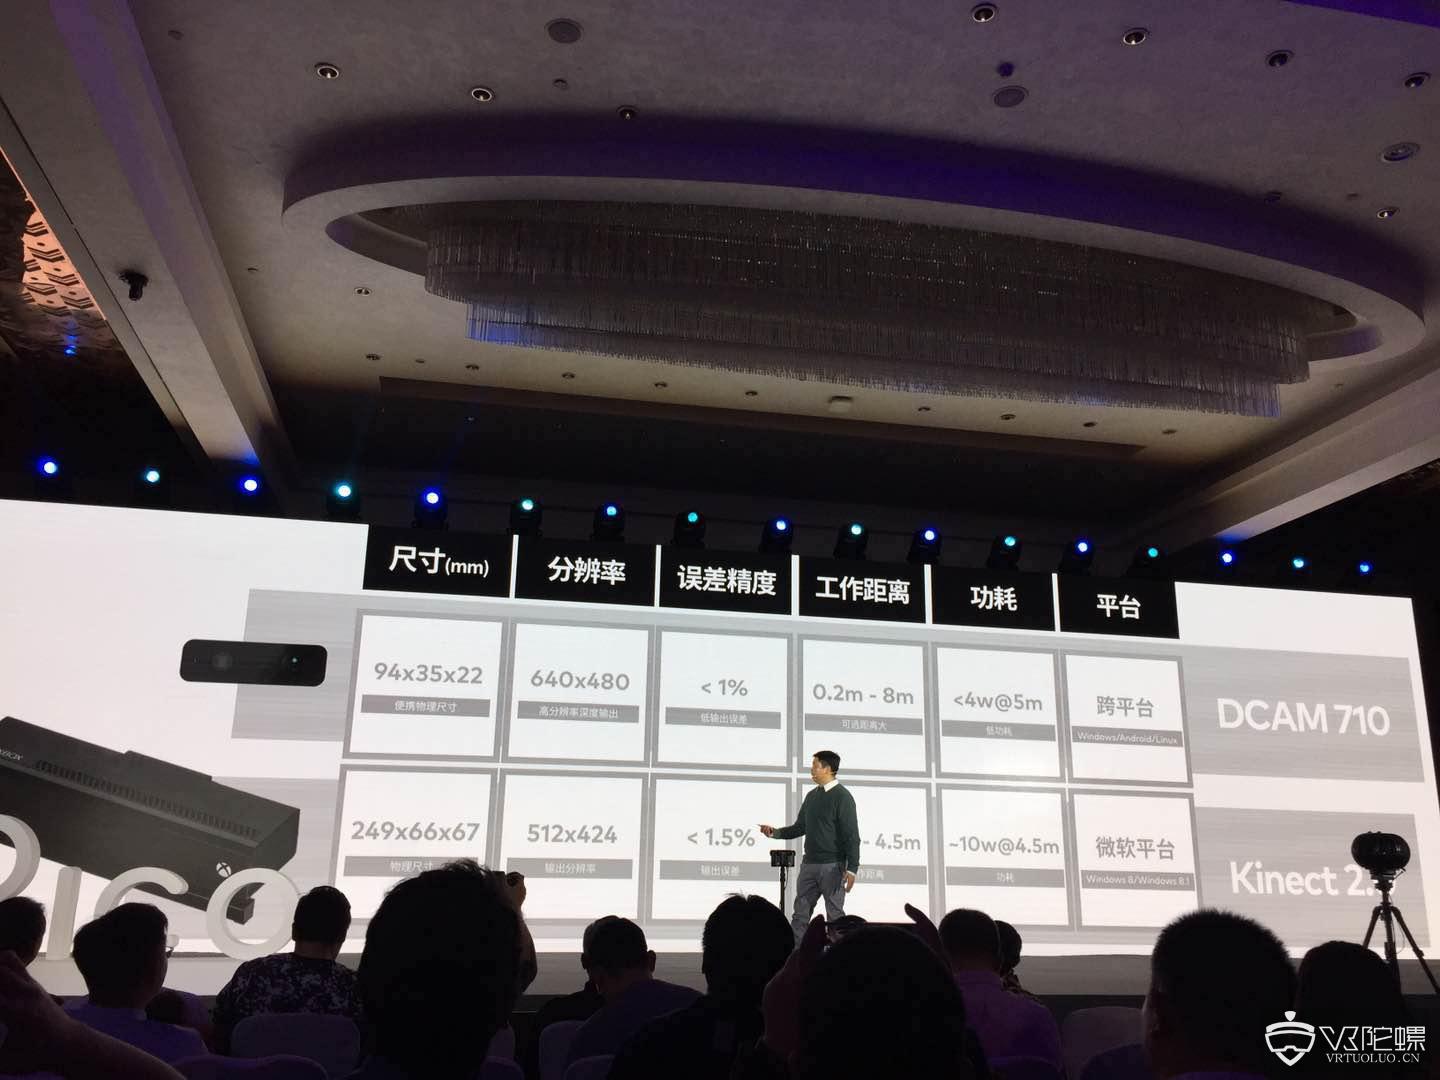 3k分辨率，头手6dof，Pico发布VR一体机Pico Neo，售价3999元起